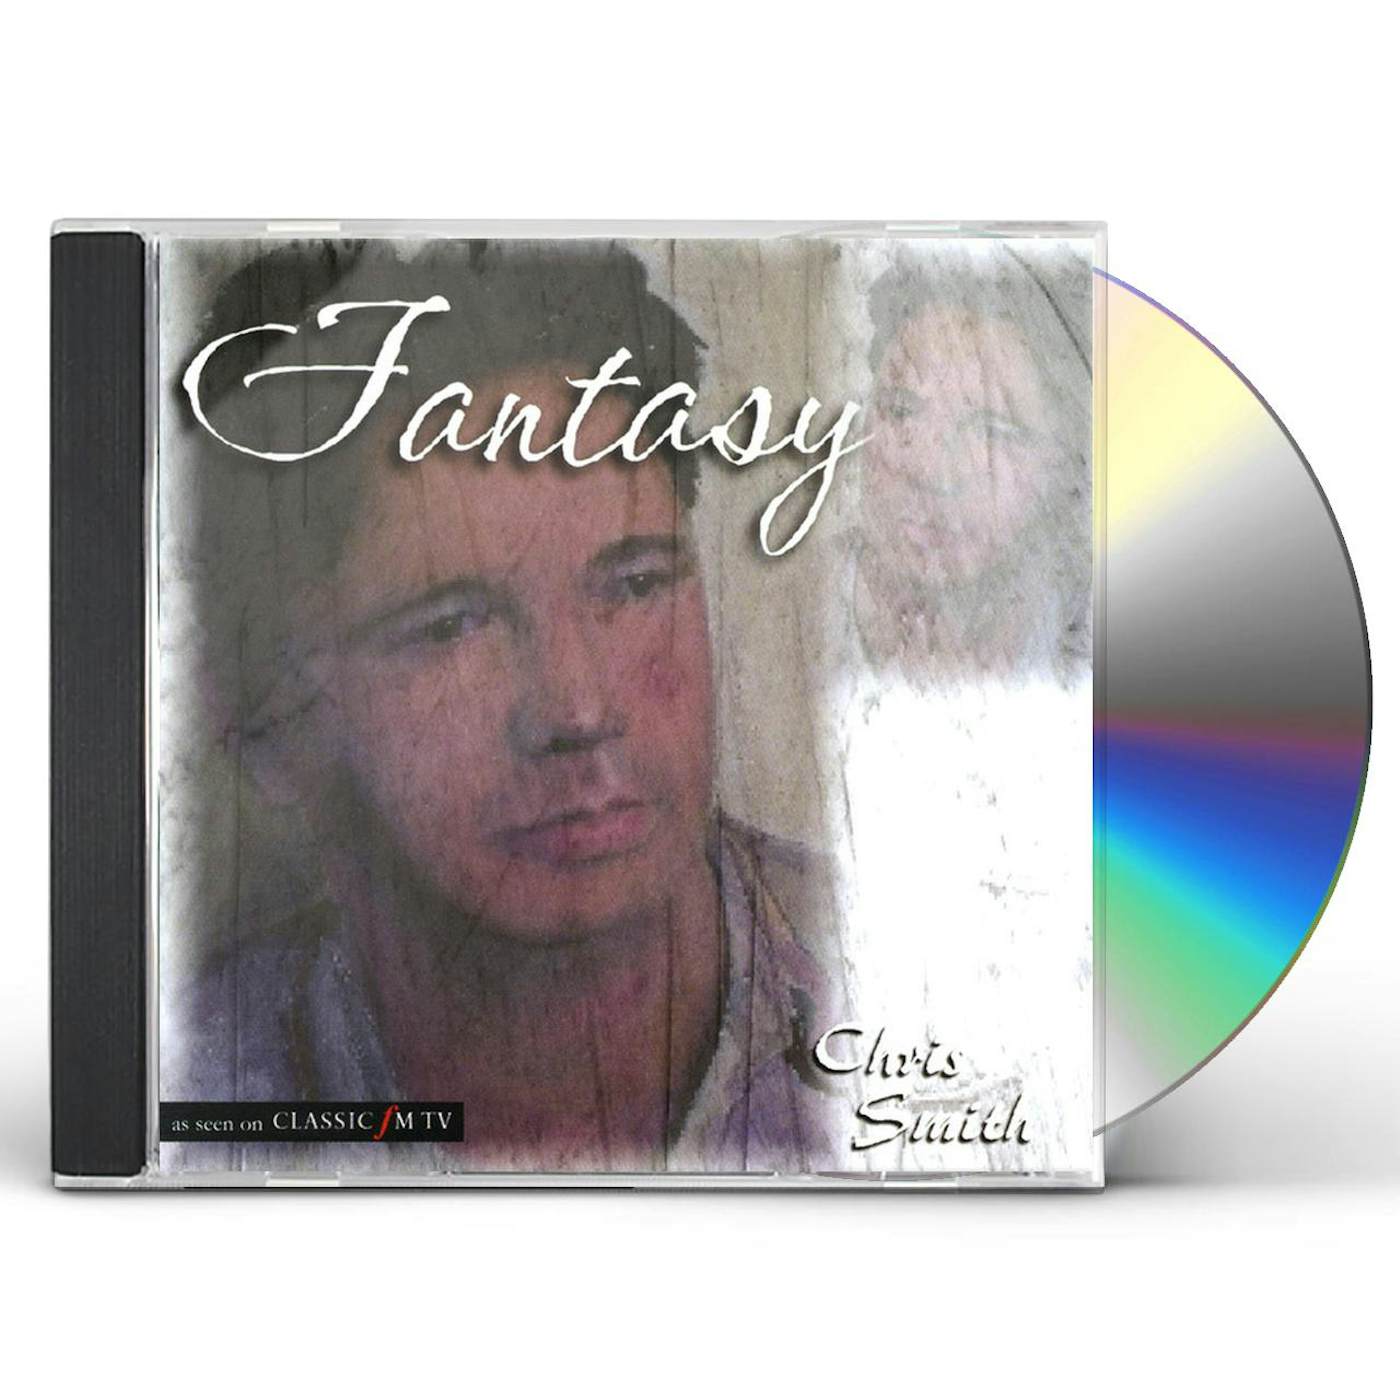 Chris Smith FANTASY CD